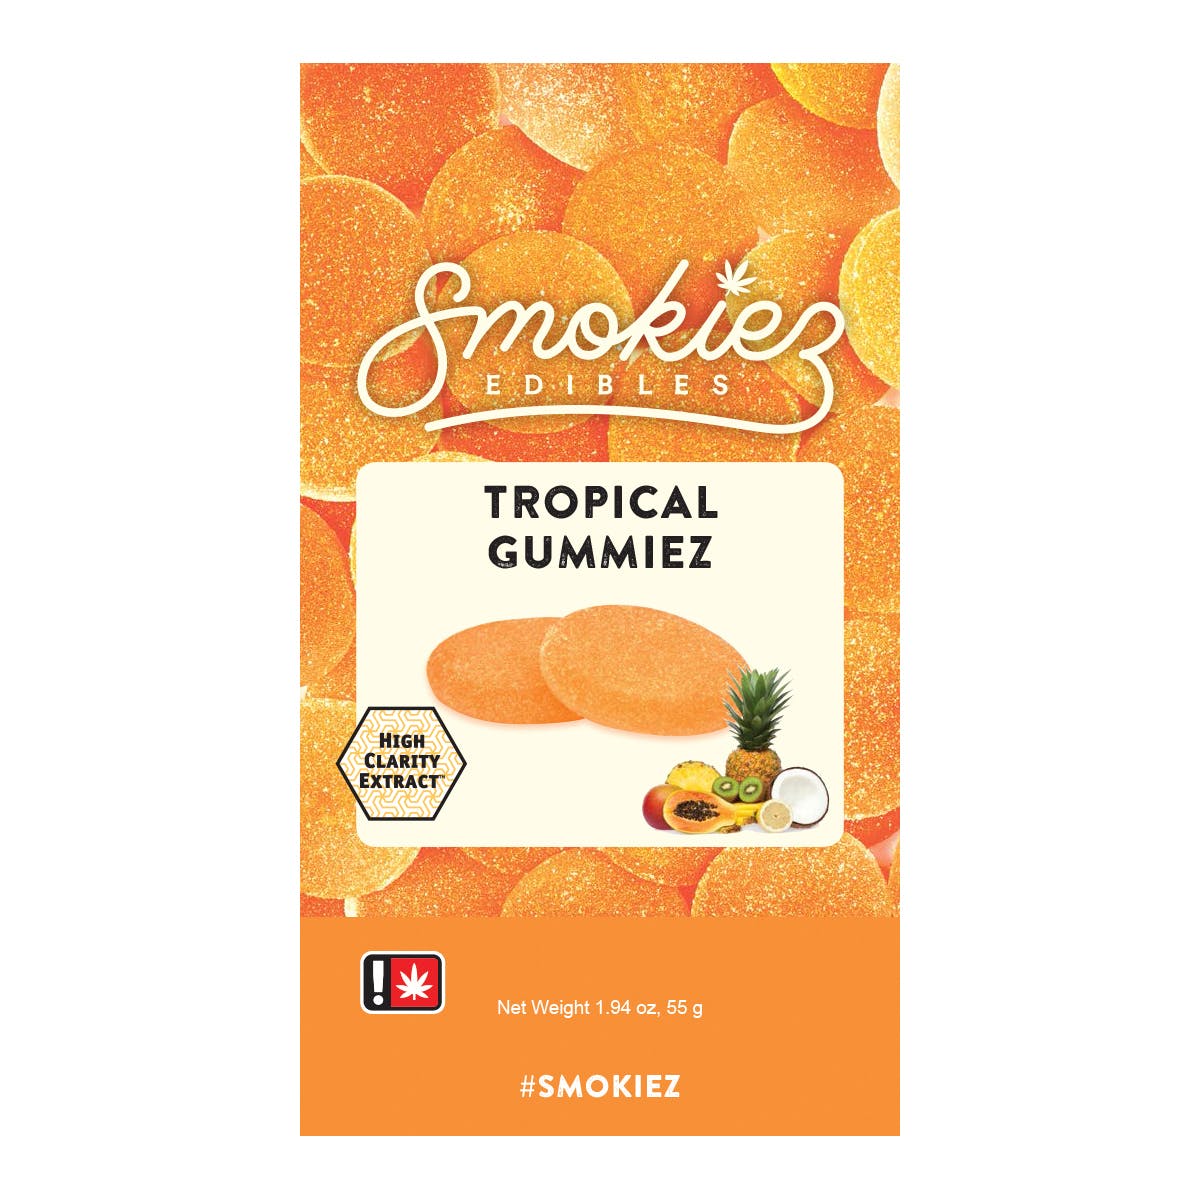 edible-smokiez-edibles-tropical-fruit-gummiez-2c-50-mg